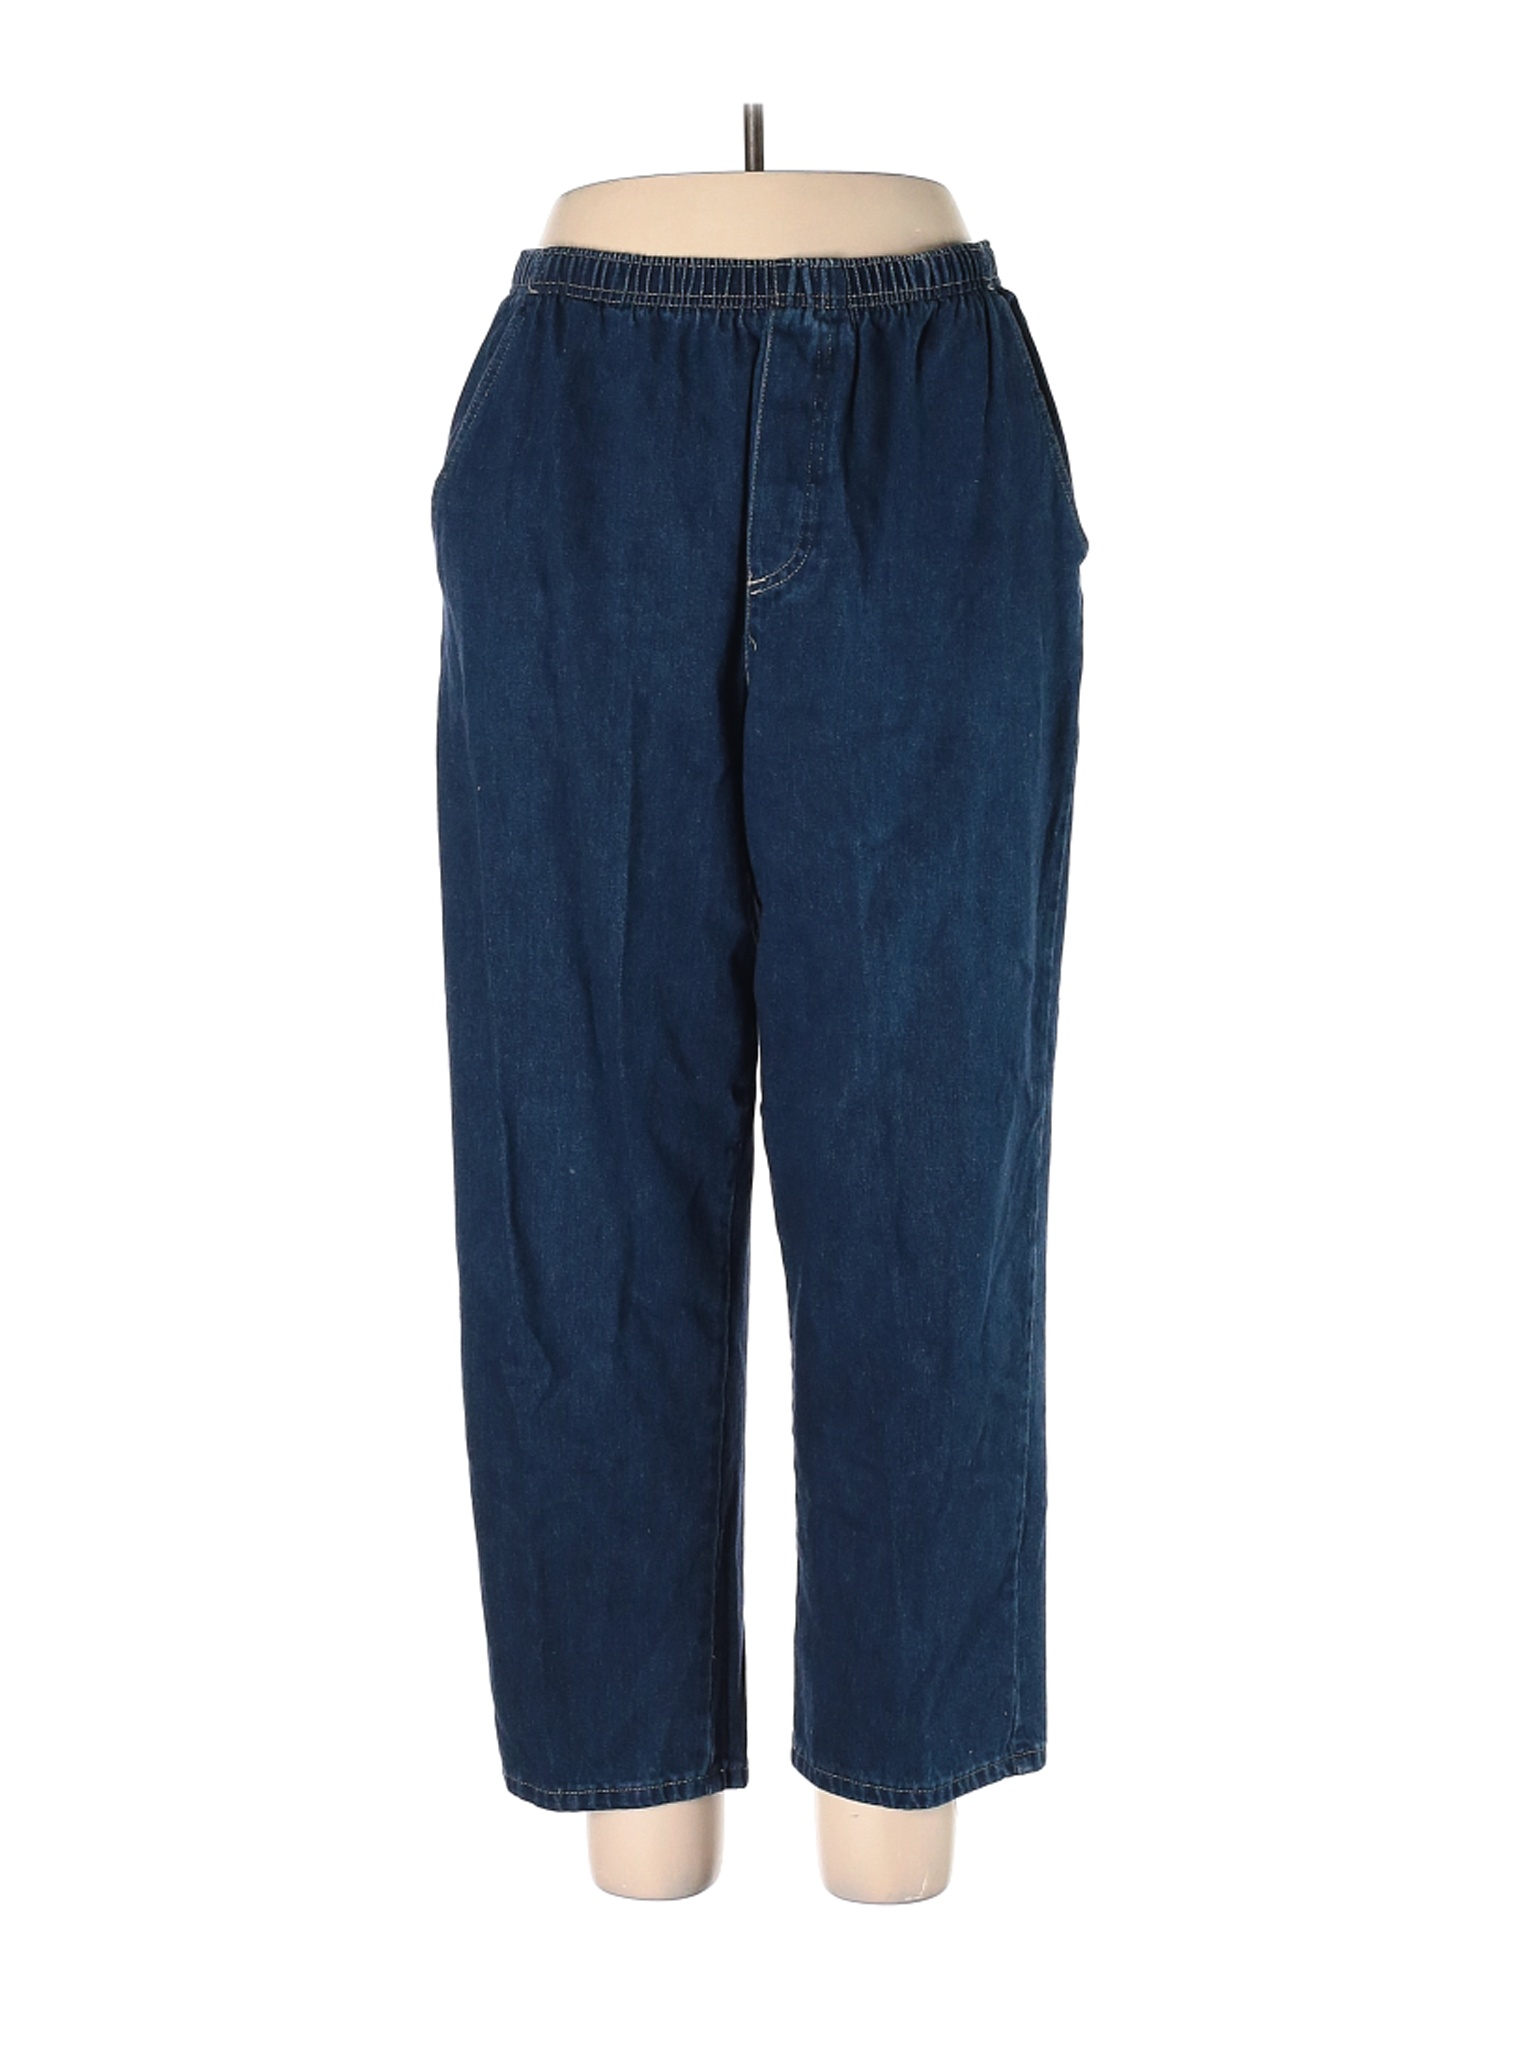 White Stag Women Blue Jeans 16 Petites | eBay